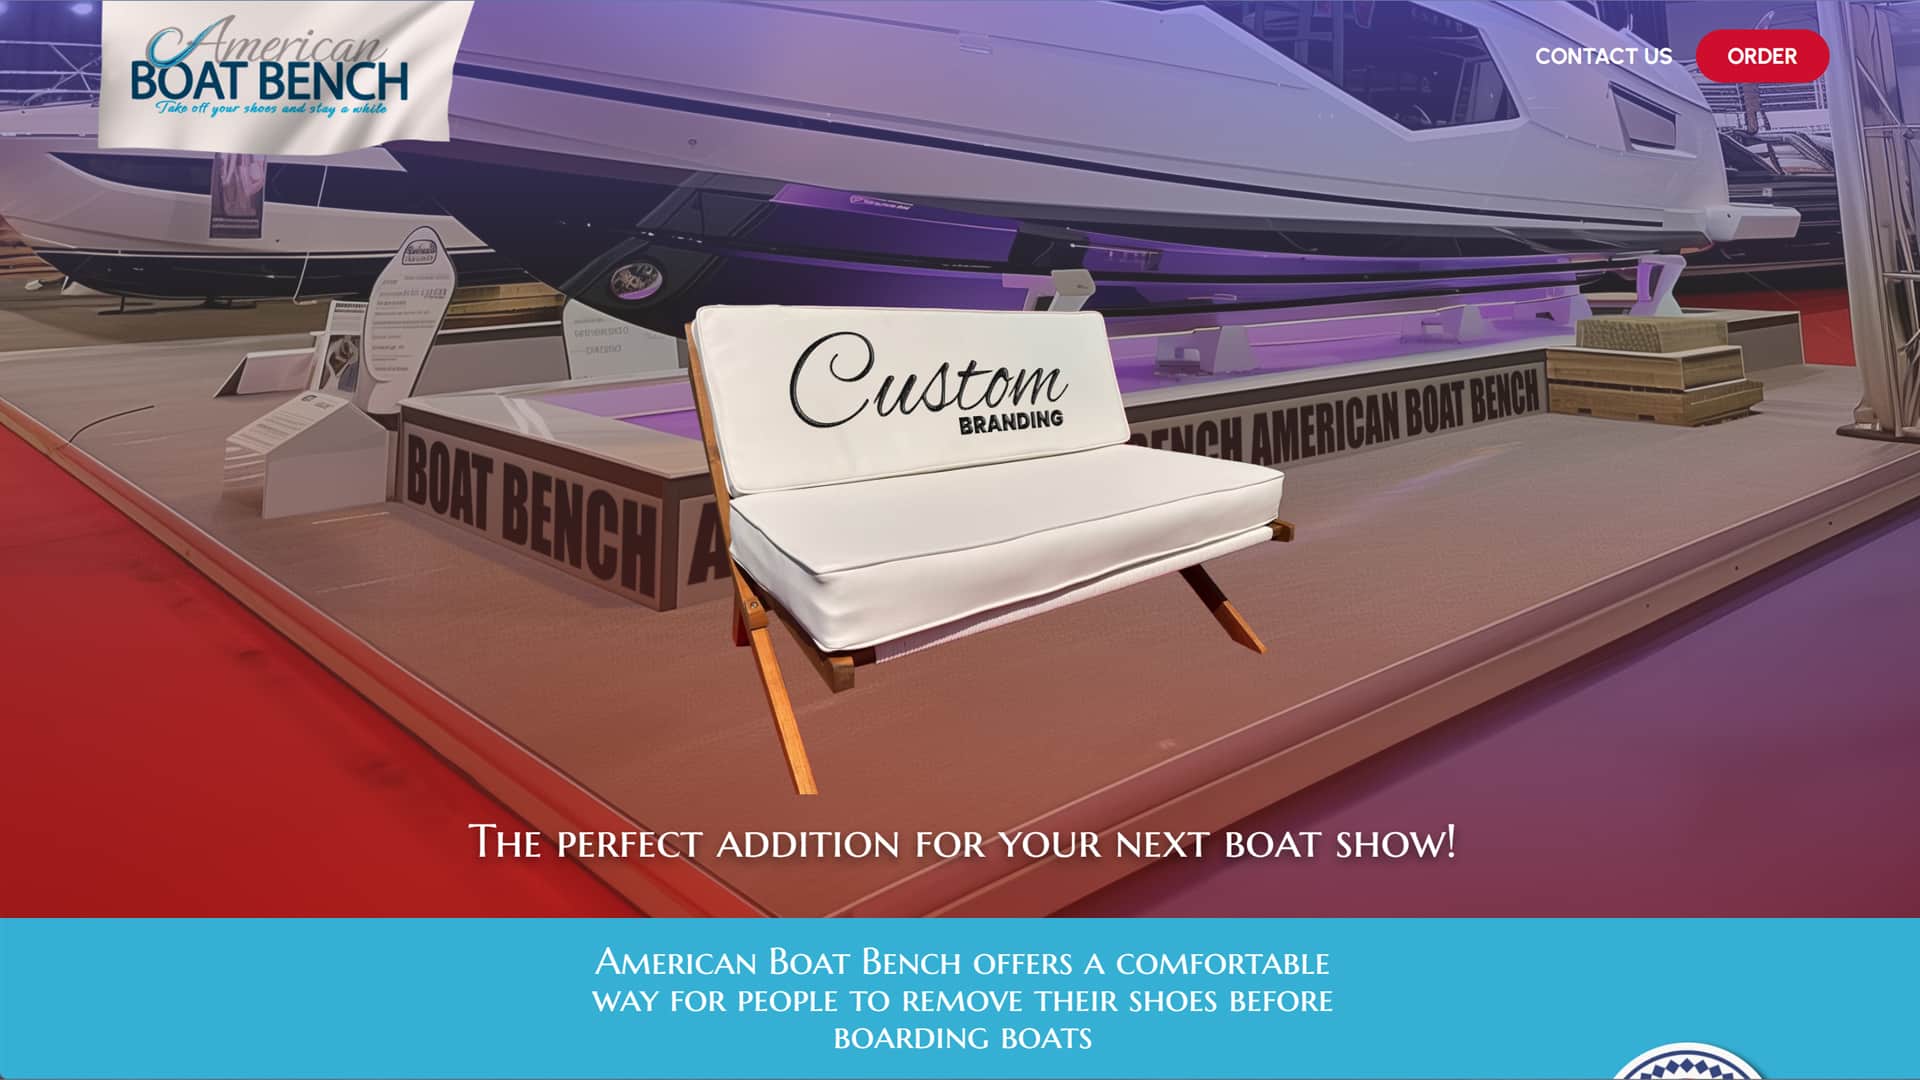 American Boat Bench portfolio image for banner display.